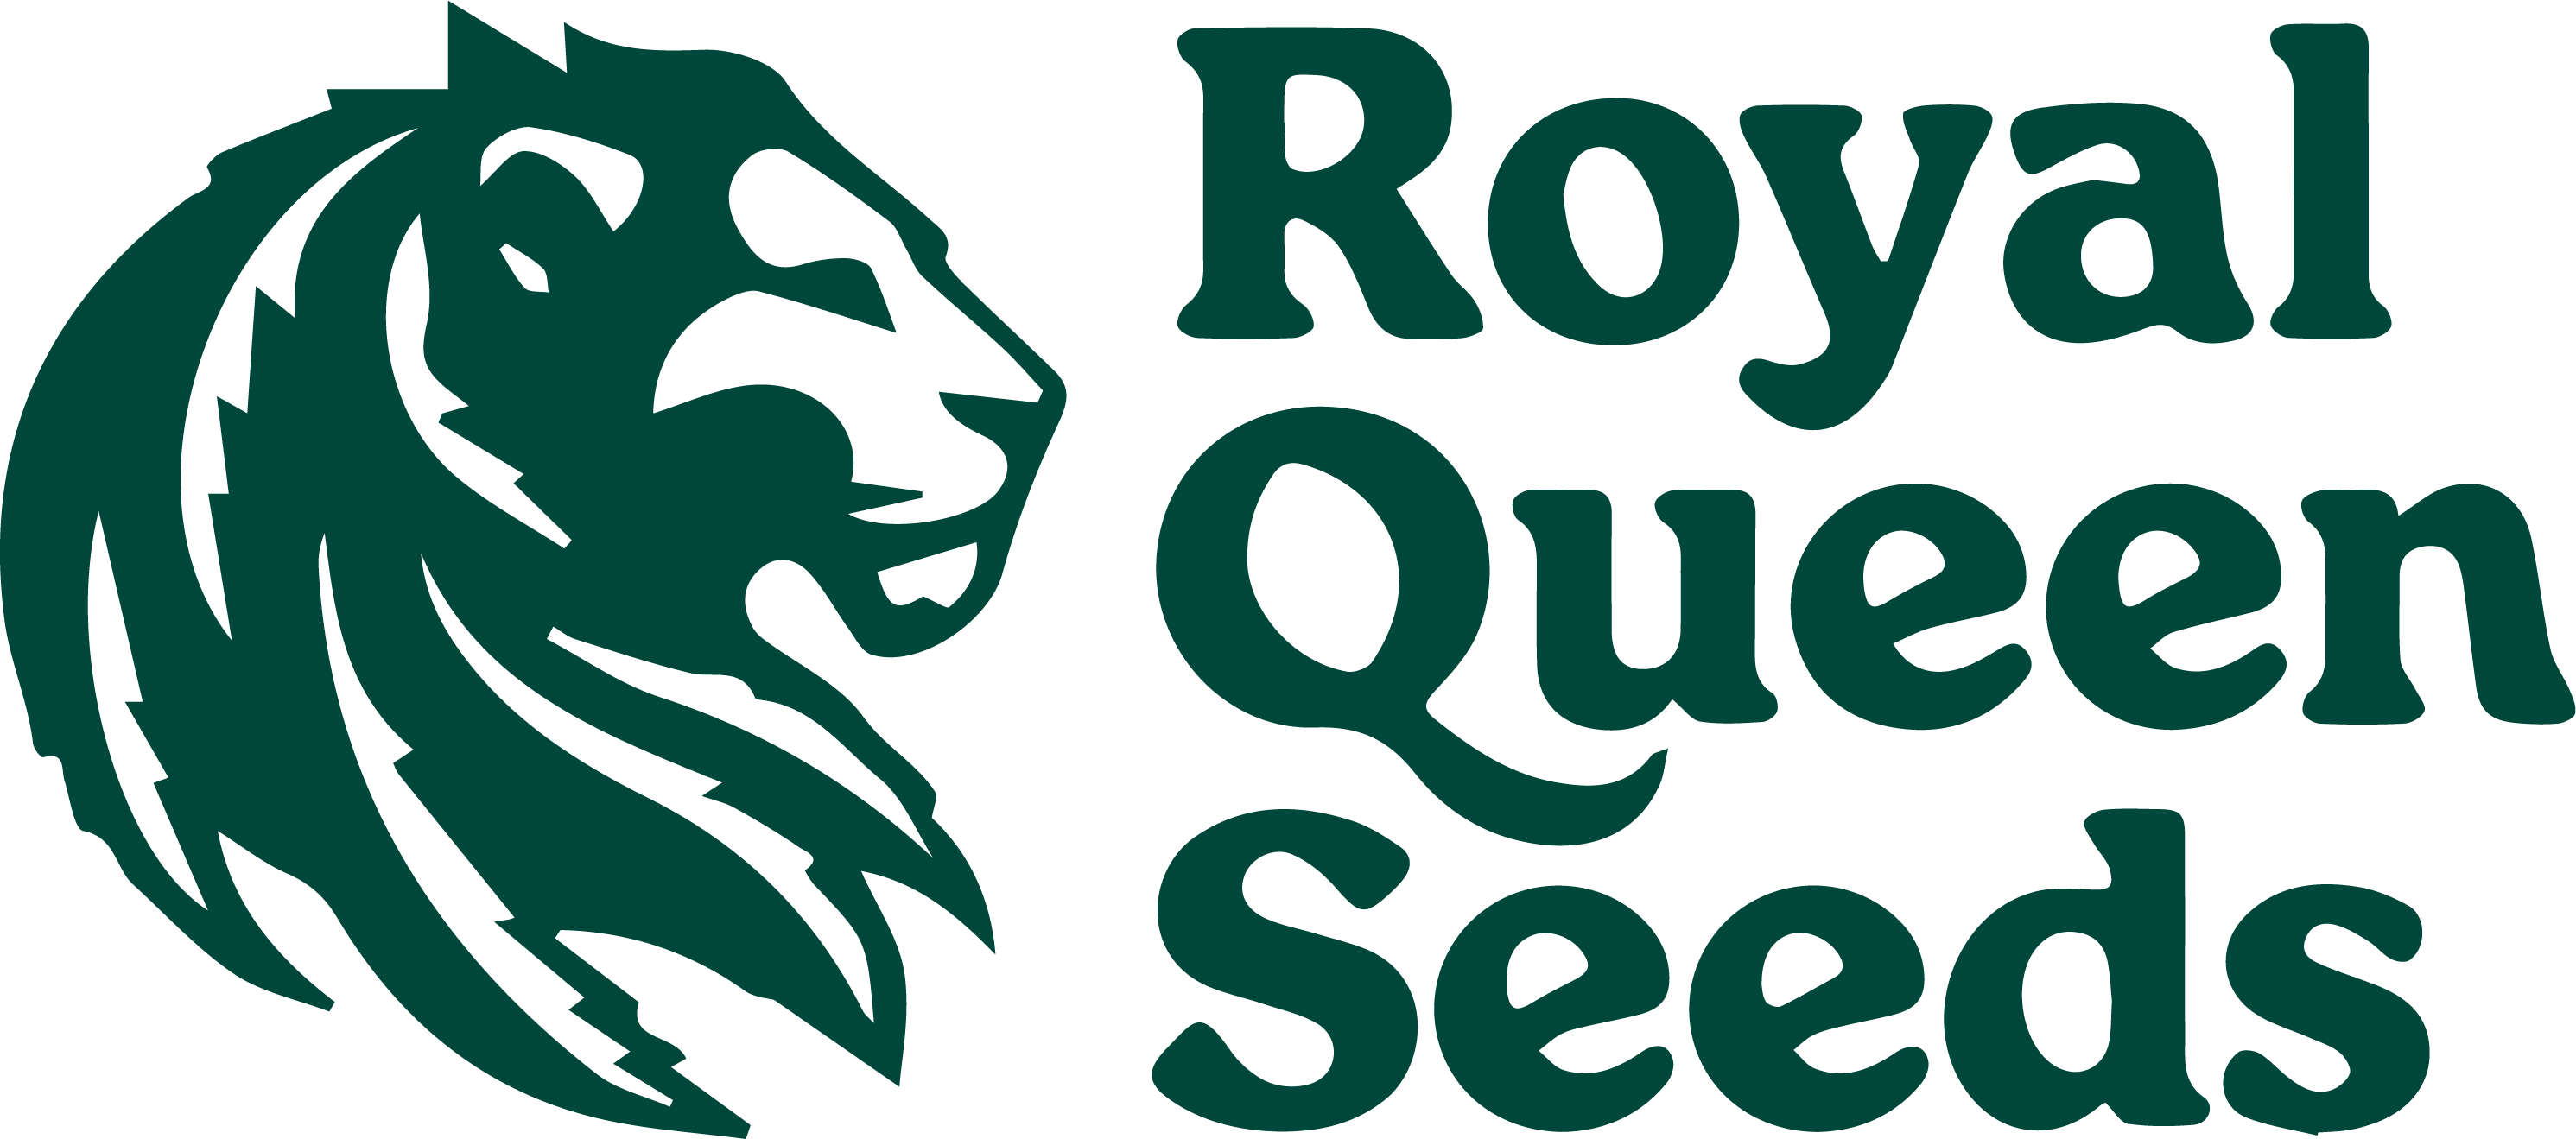 Royal Queen Seeds - CBD semena konoplje - Tyson 2.0